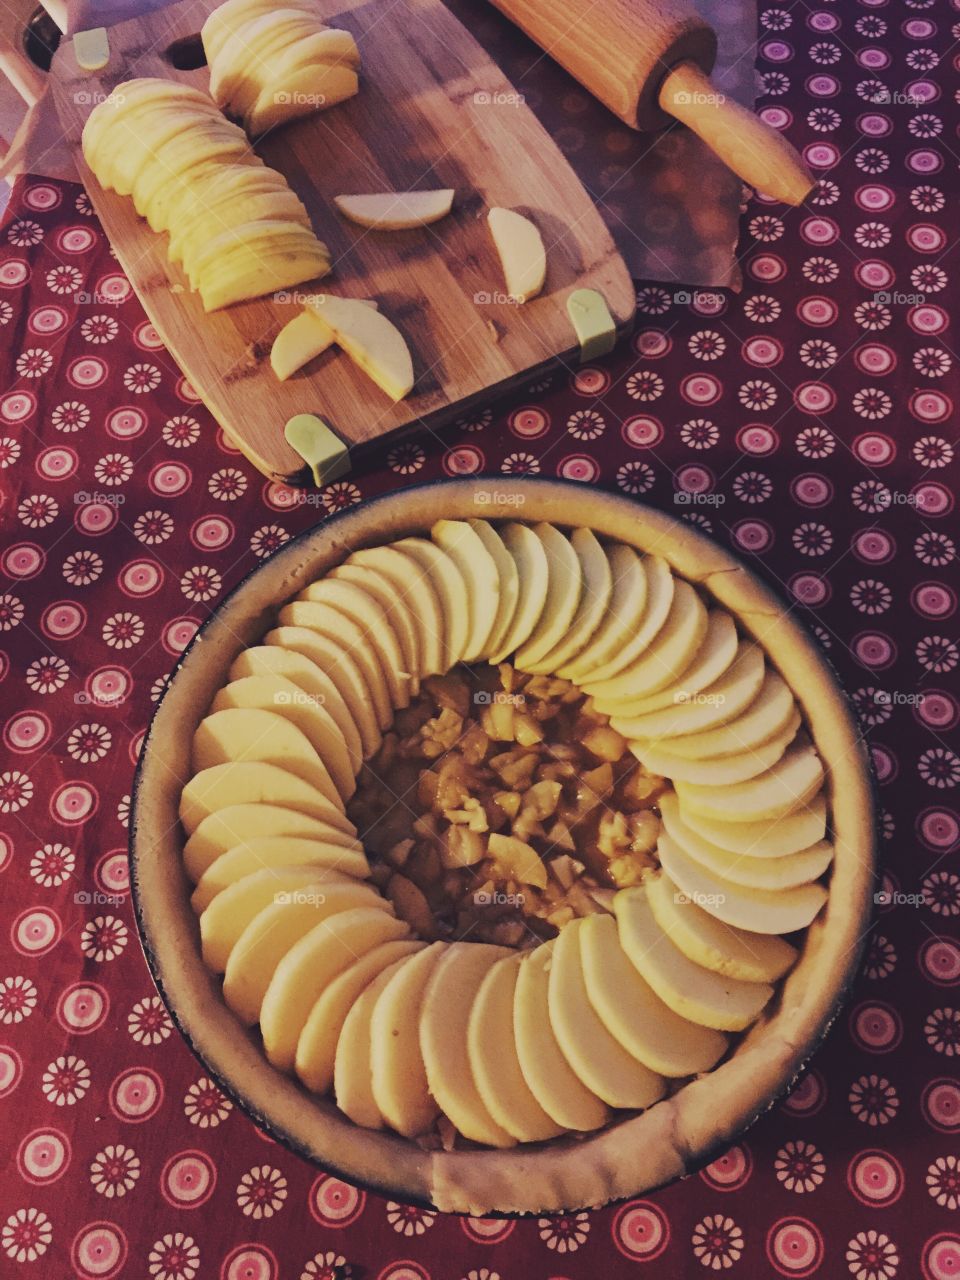 Making a pie. Process of making an apple tart